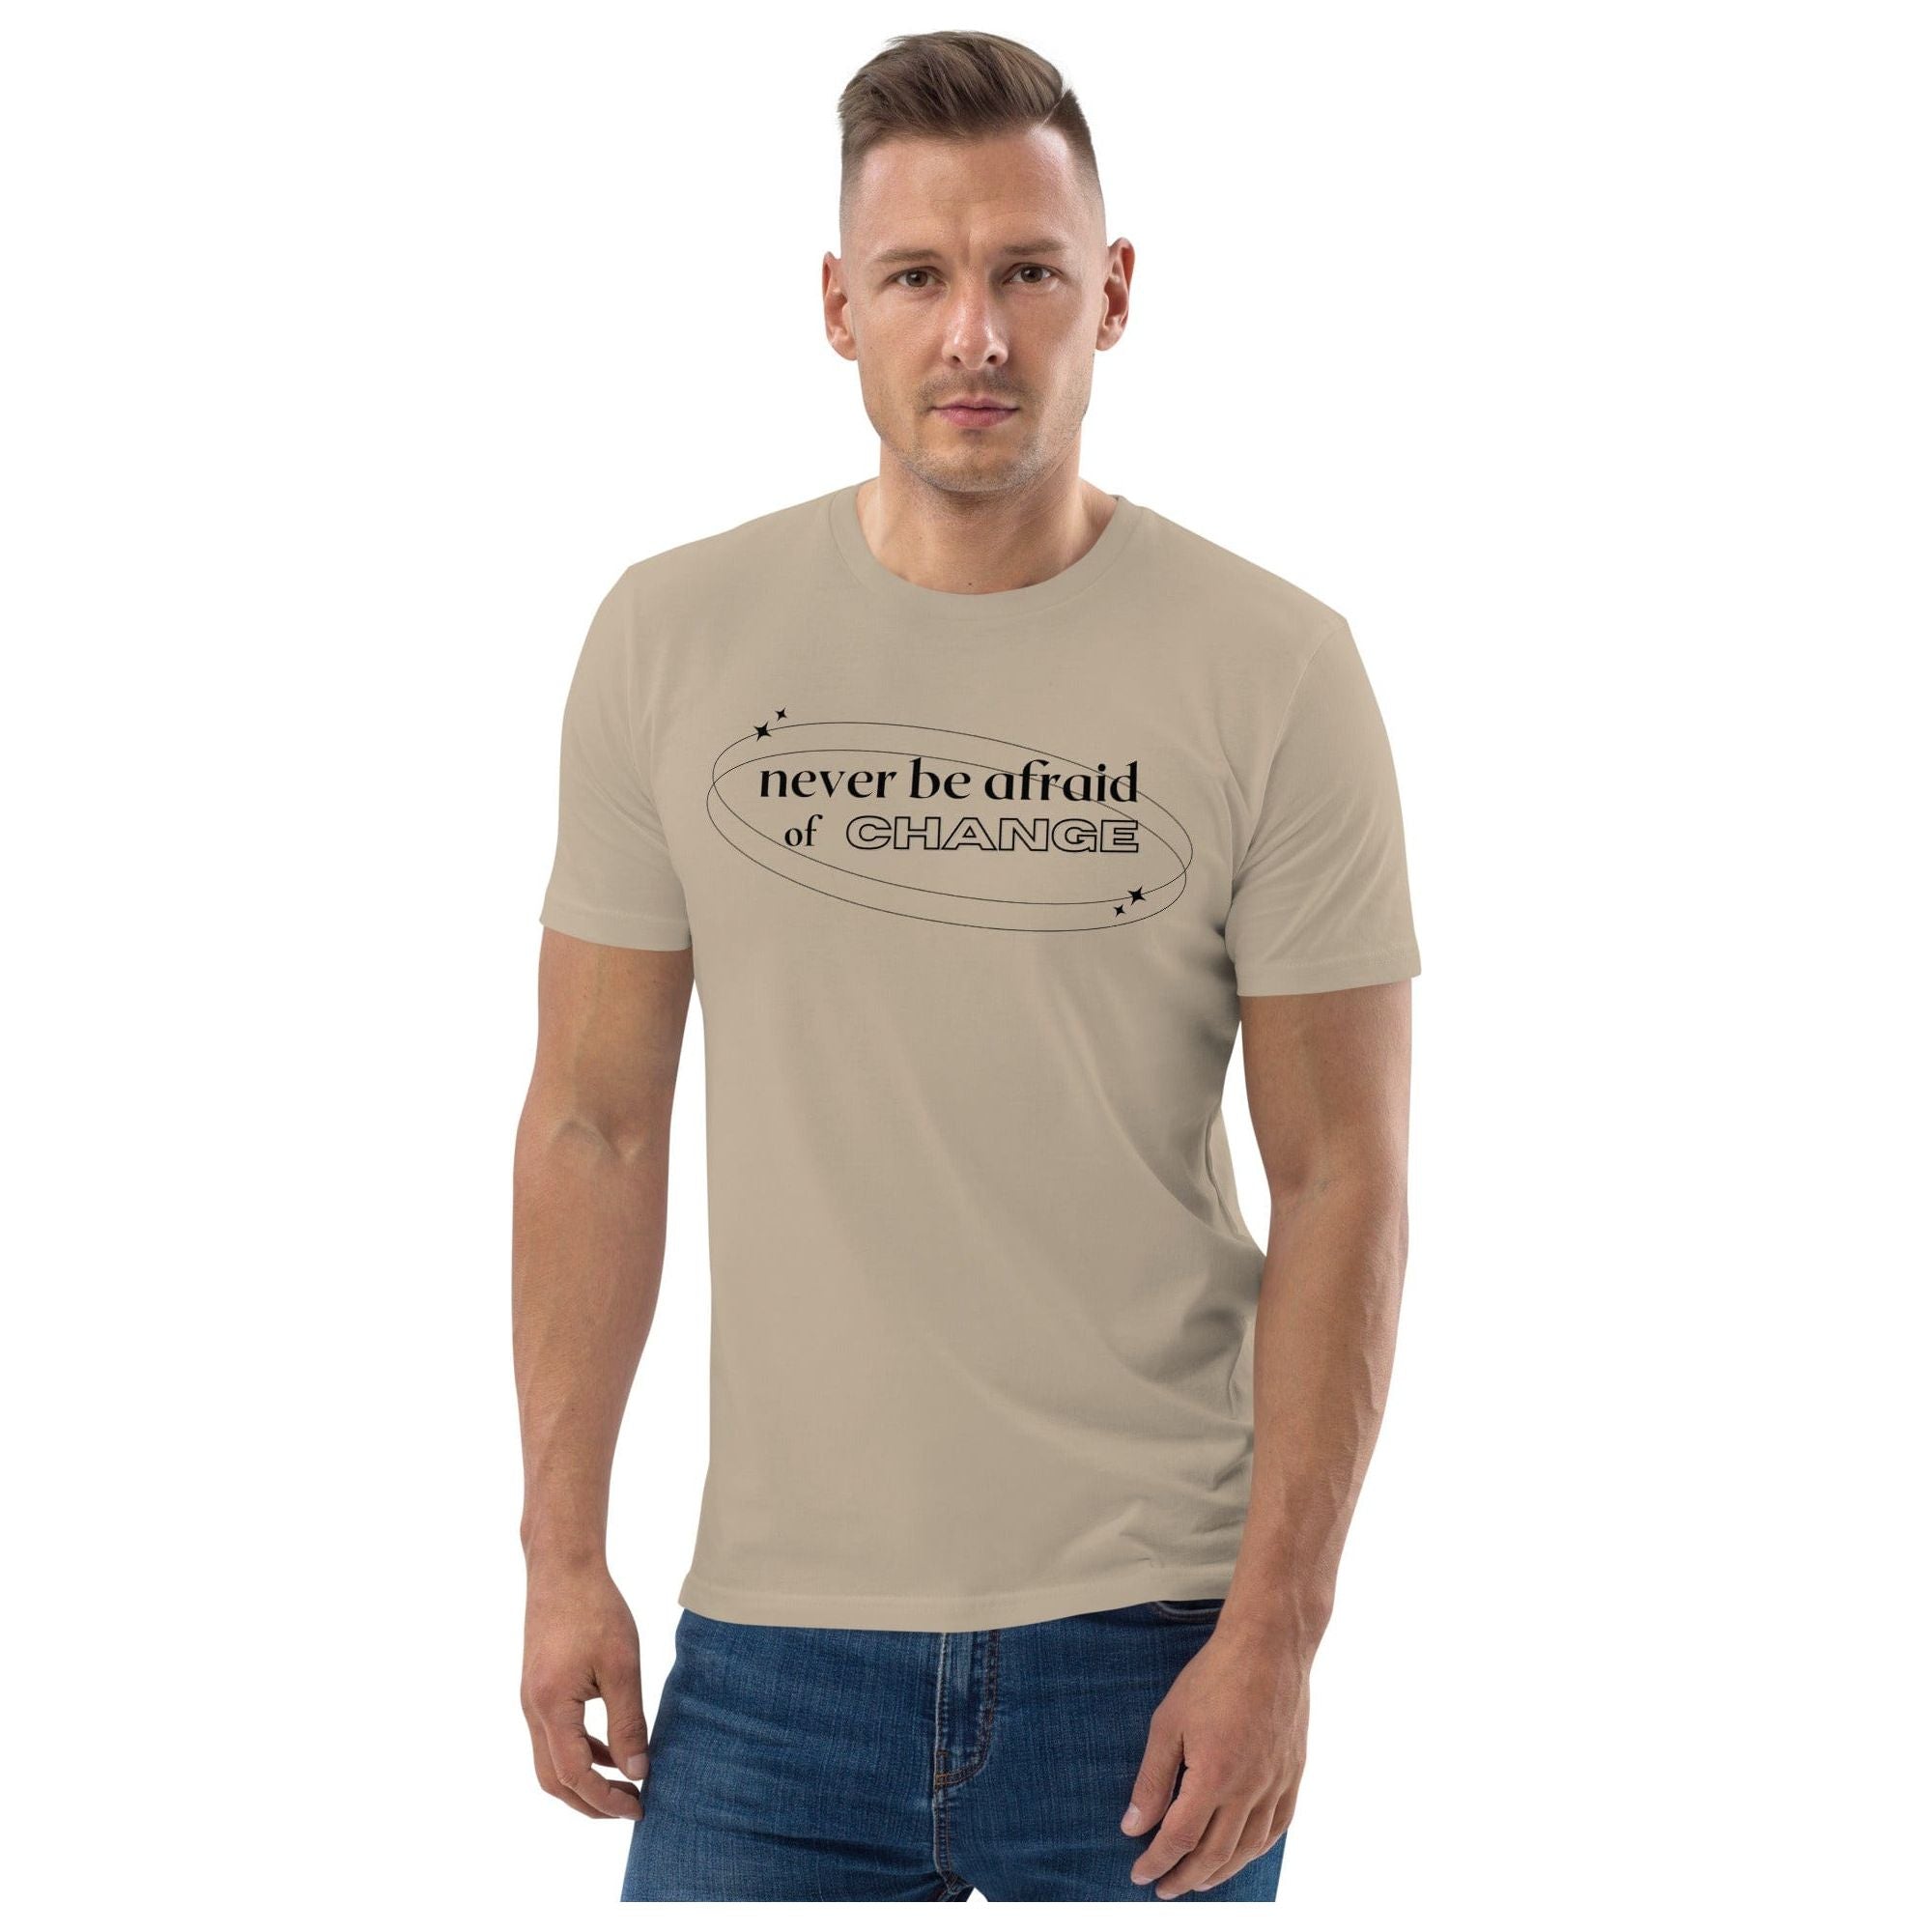 Karma Kiss T Shirt Never Be Afraid of Change - Unisex Organic Cotton T-Shirt